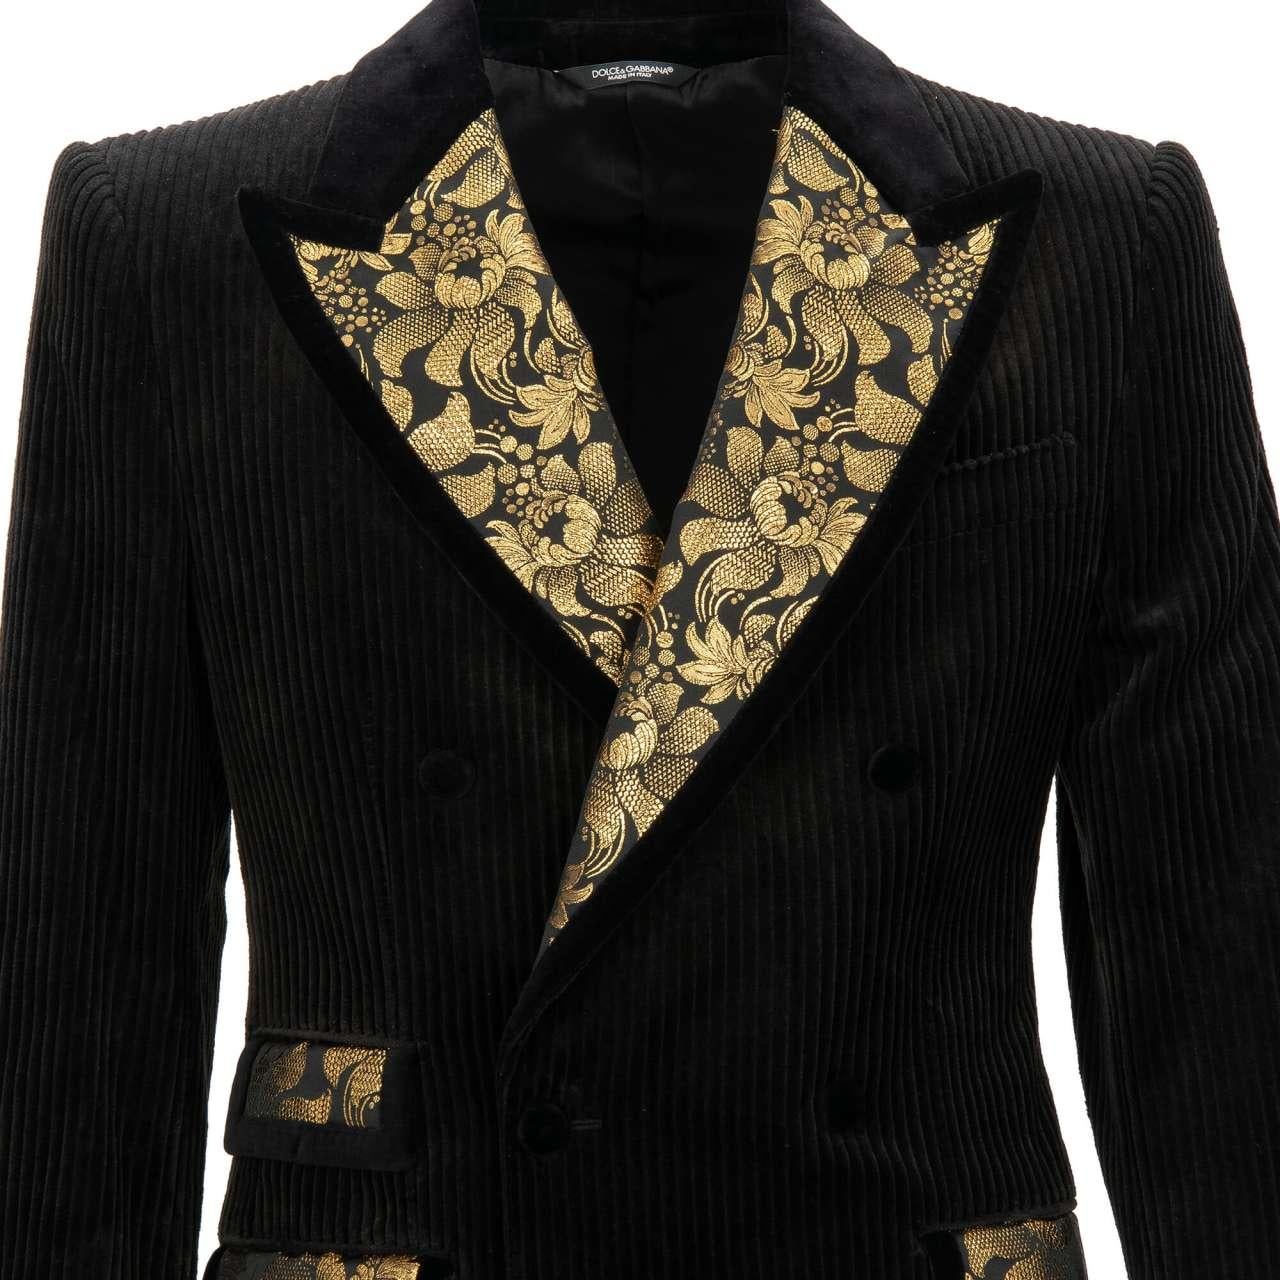 Dolce & Gabbana Floral Corduloy Blazer Tuxedo Jacket Black Gold 46 36 S In Excellent Condition For Sale In Erkrath, DE